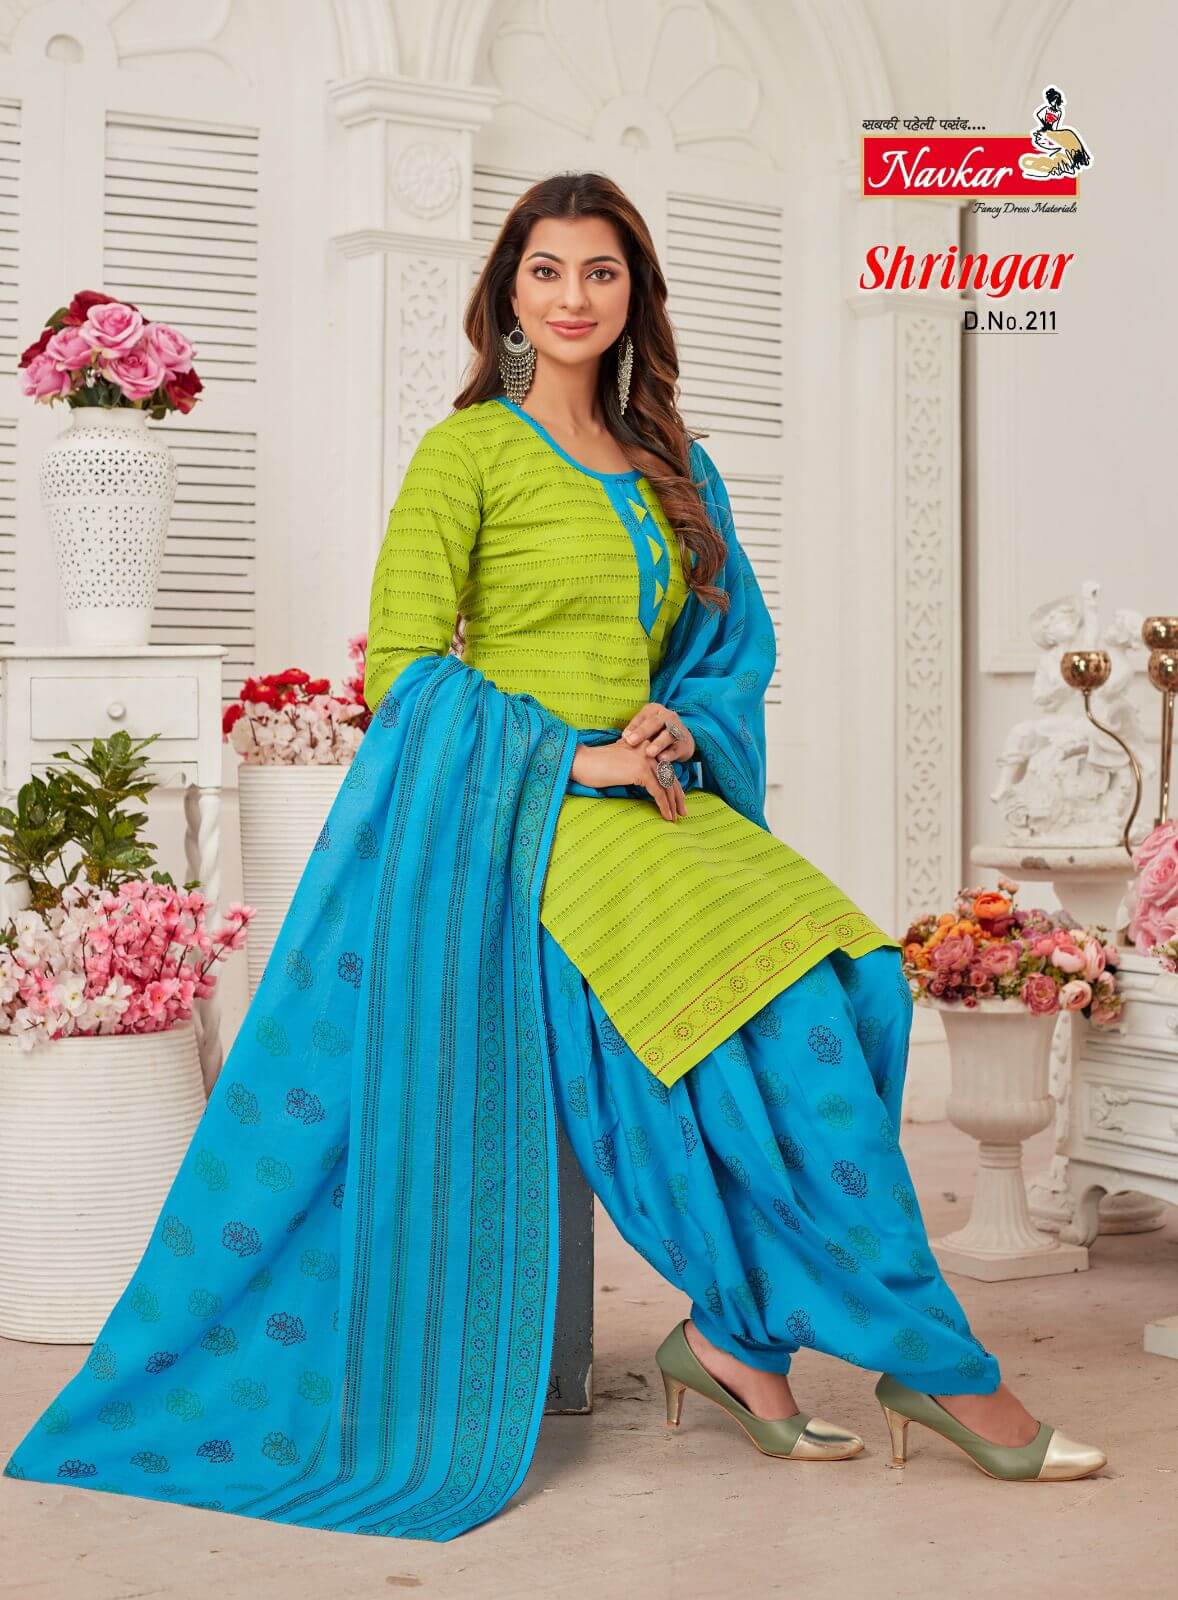 Navkar Shringar vol 2 Readymade Dress Catalog collection 7